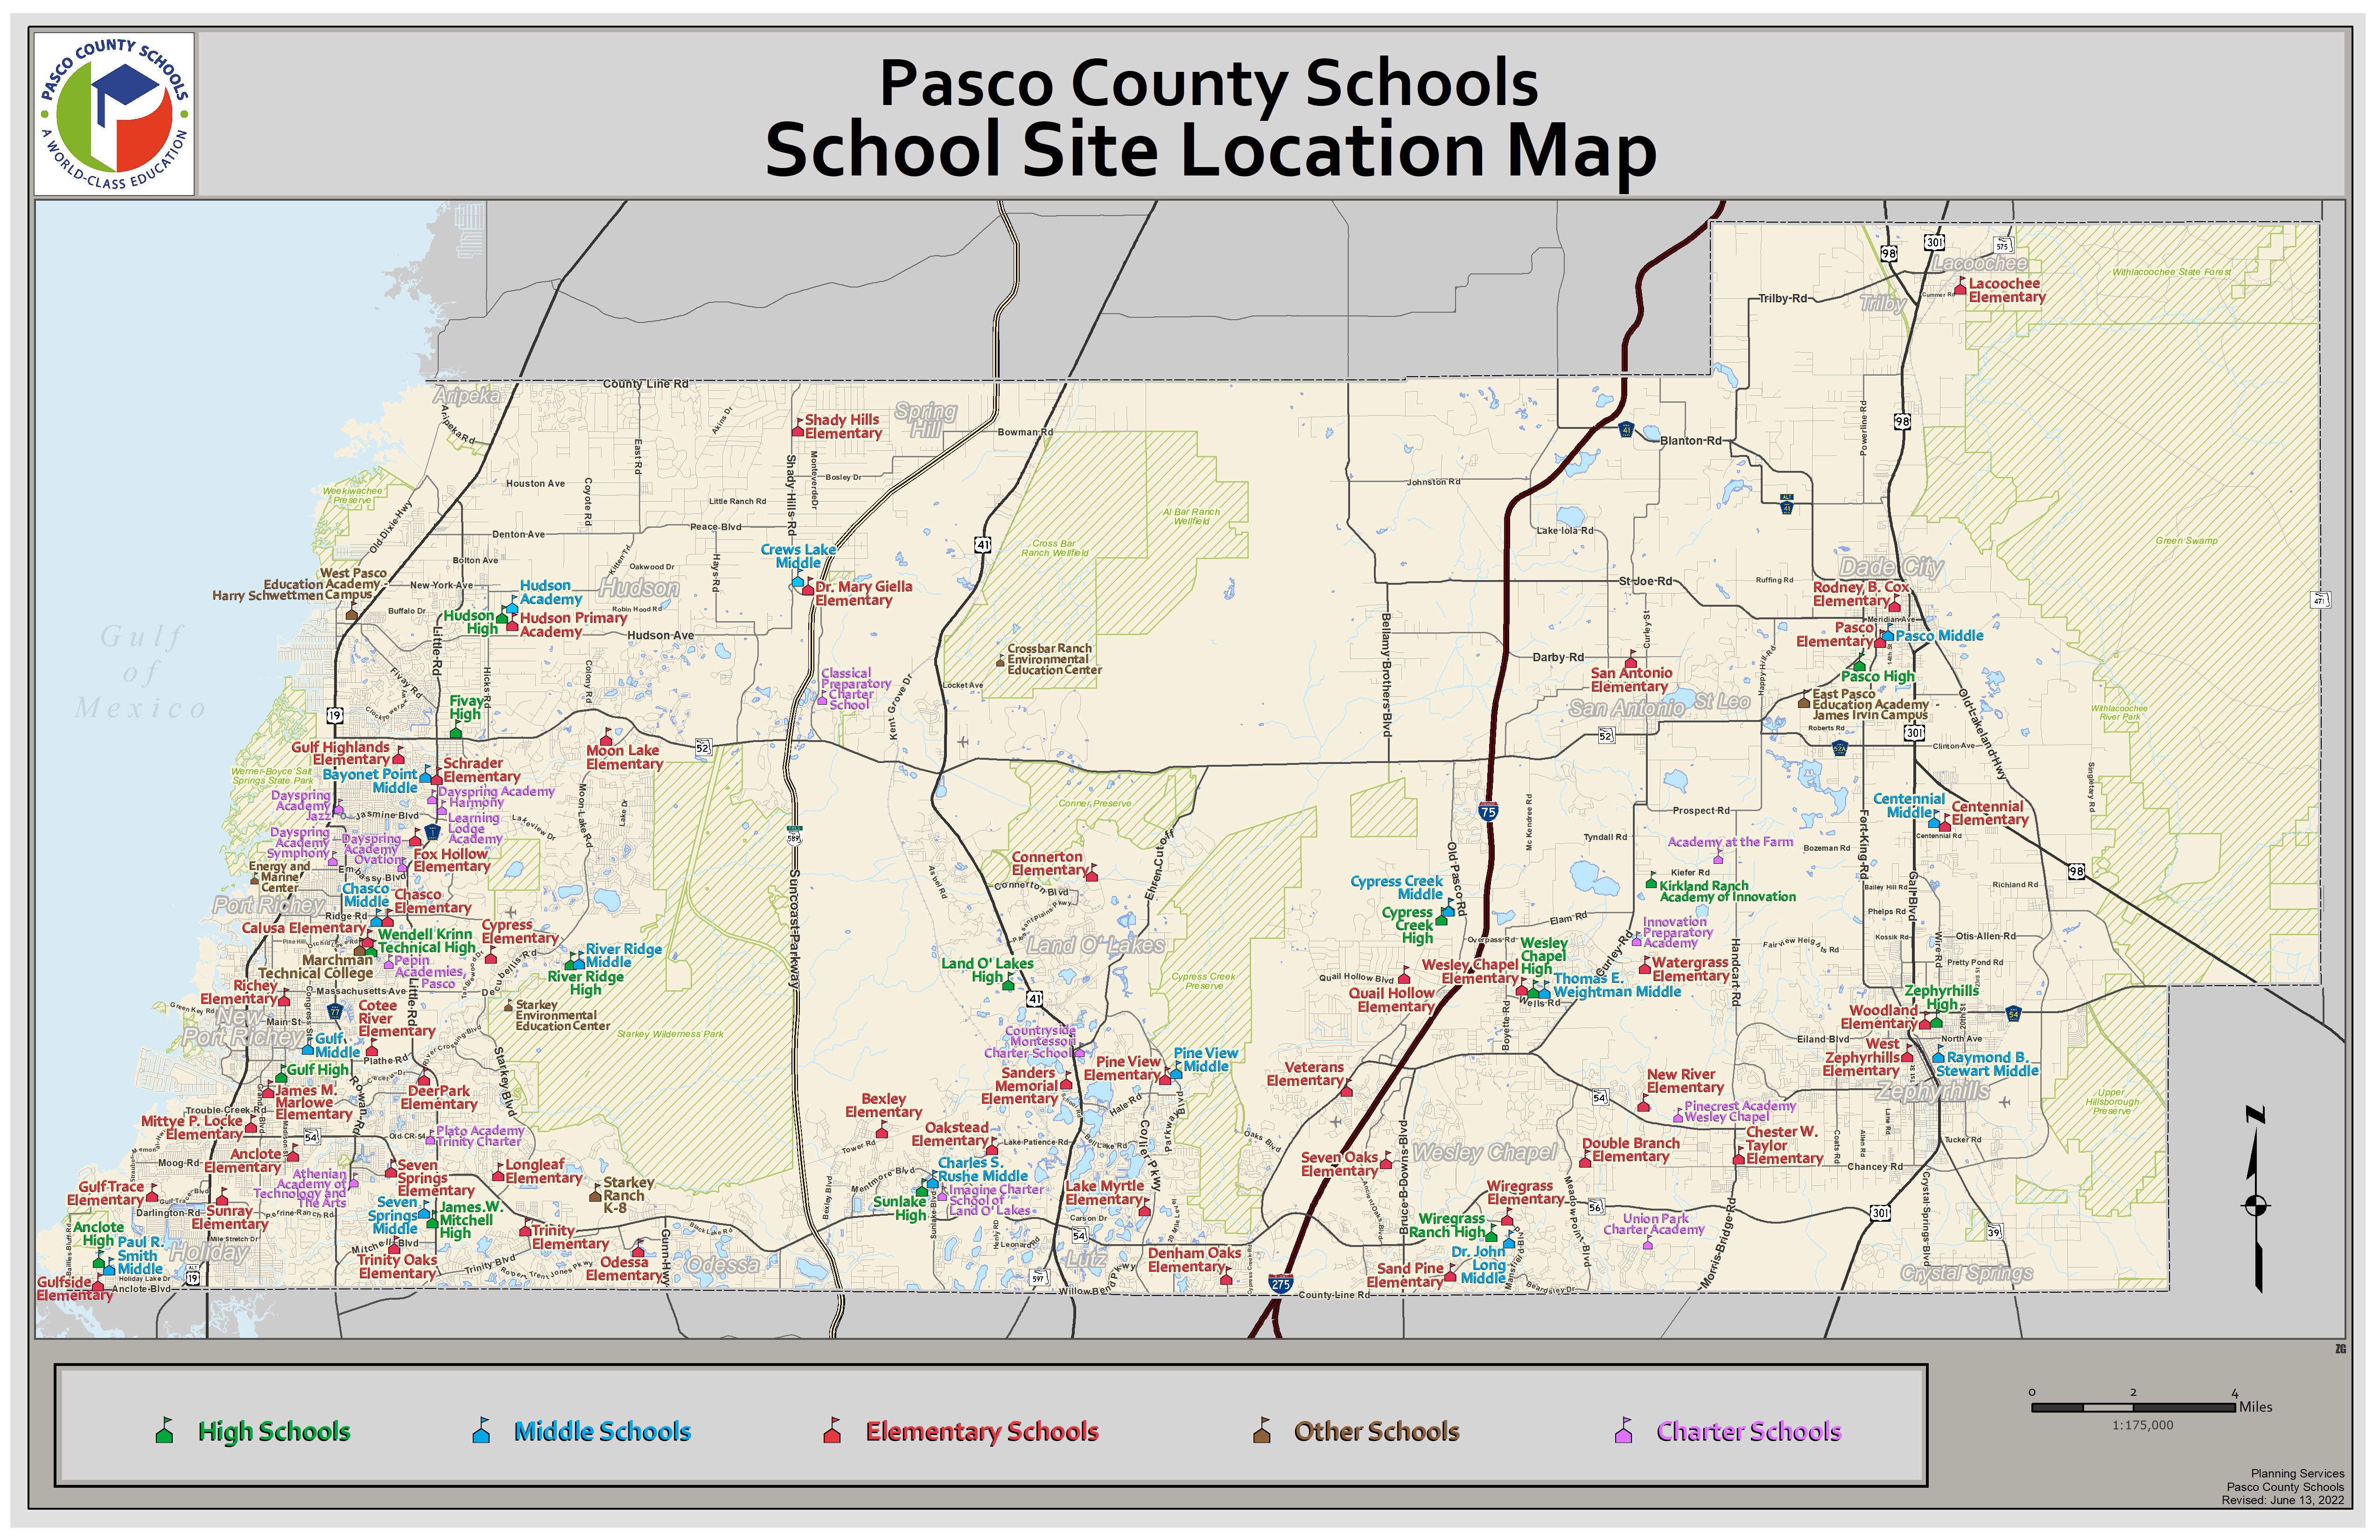 Pasco County School News, October